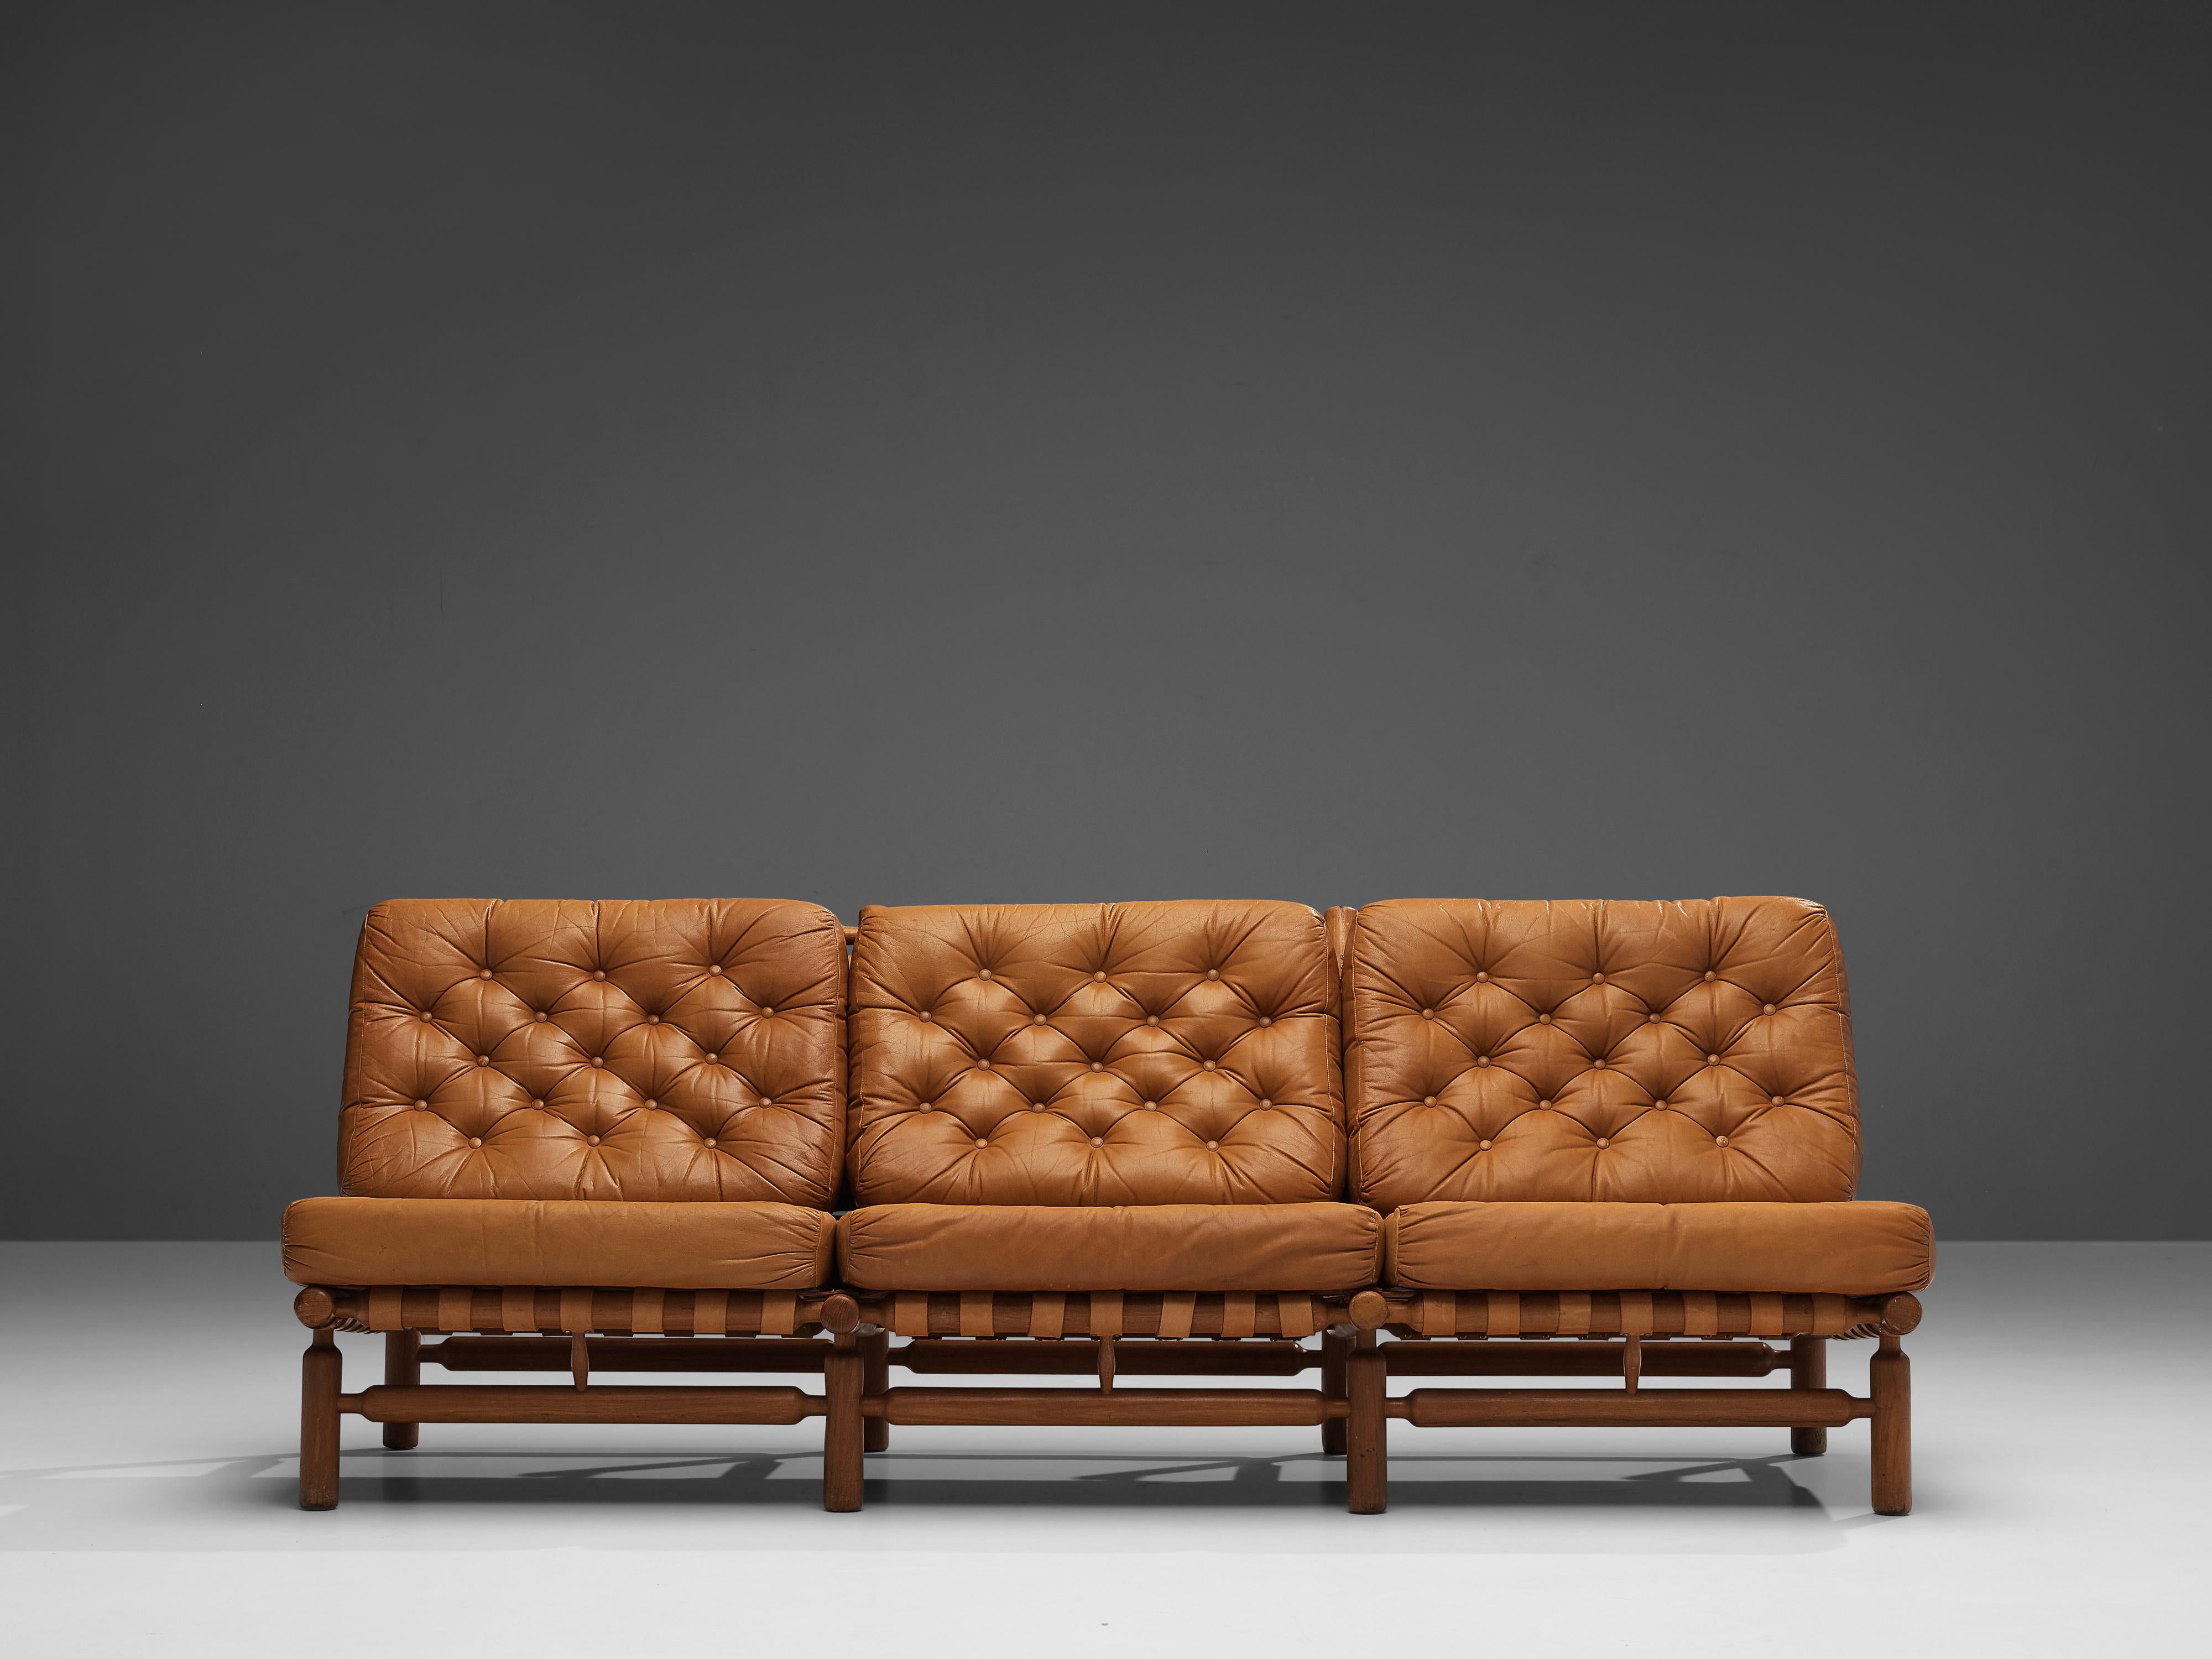 Brass Ilmari Tapiovaara Sectional Sofa and Ottoman in Cognac Leather